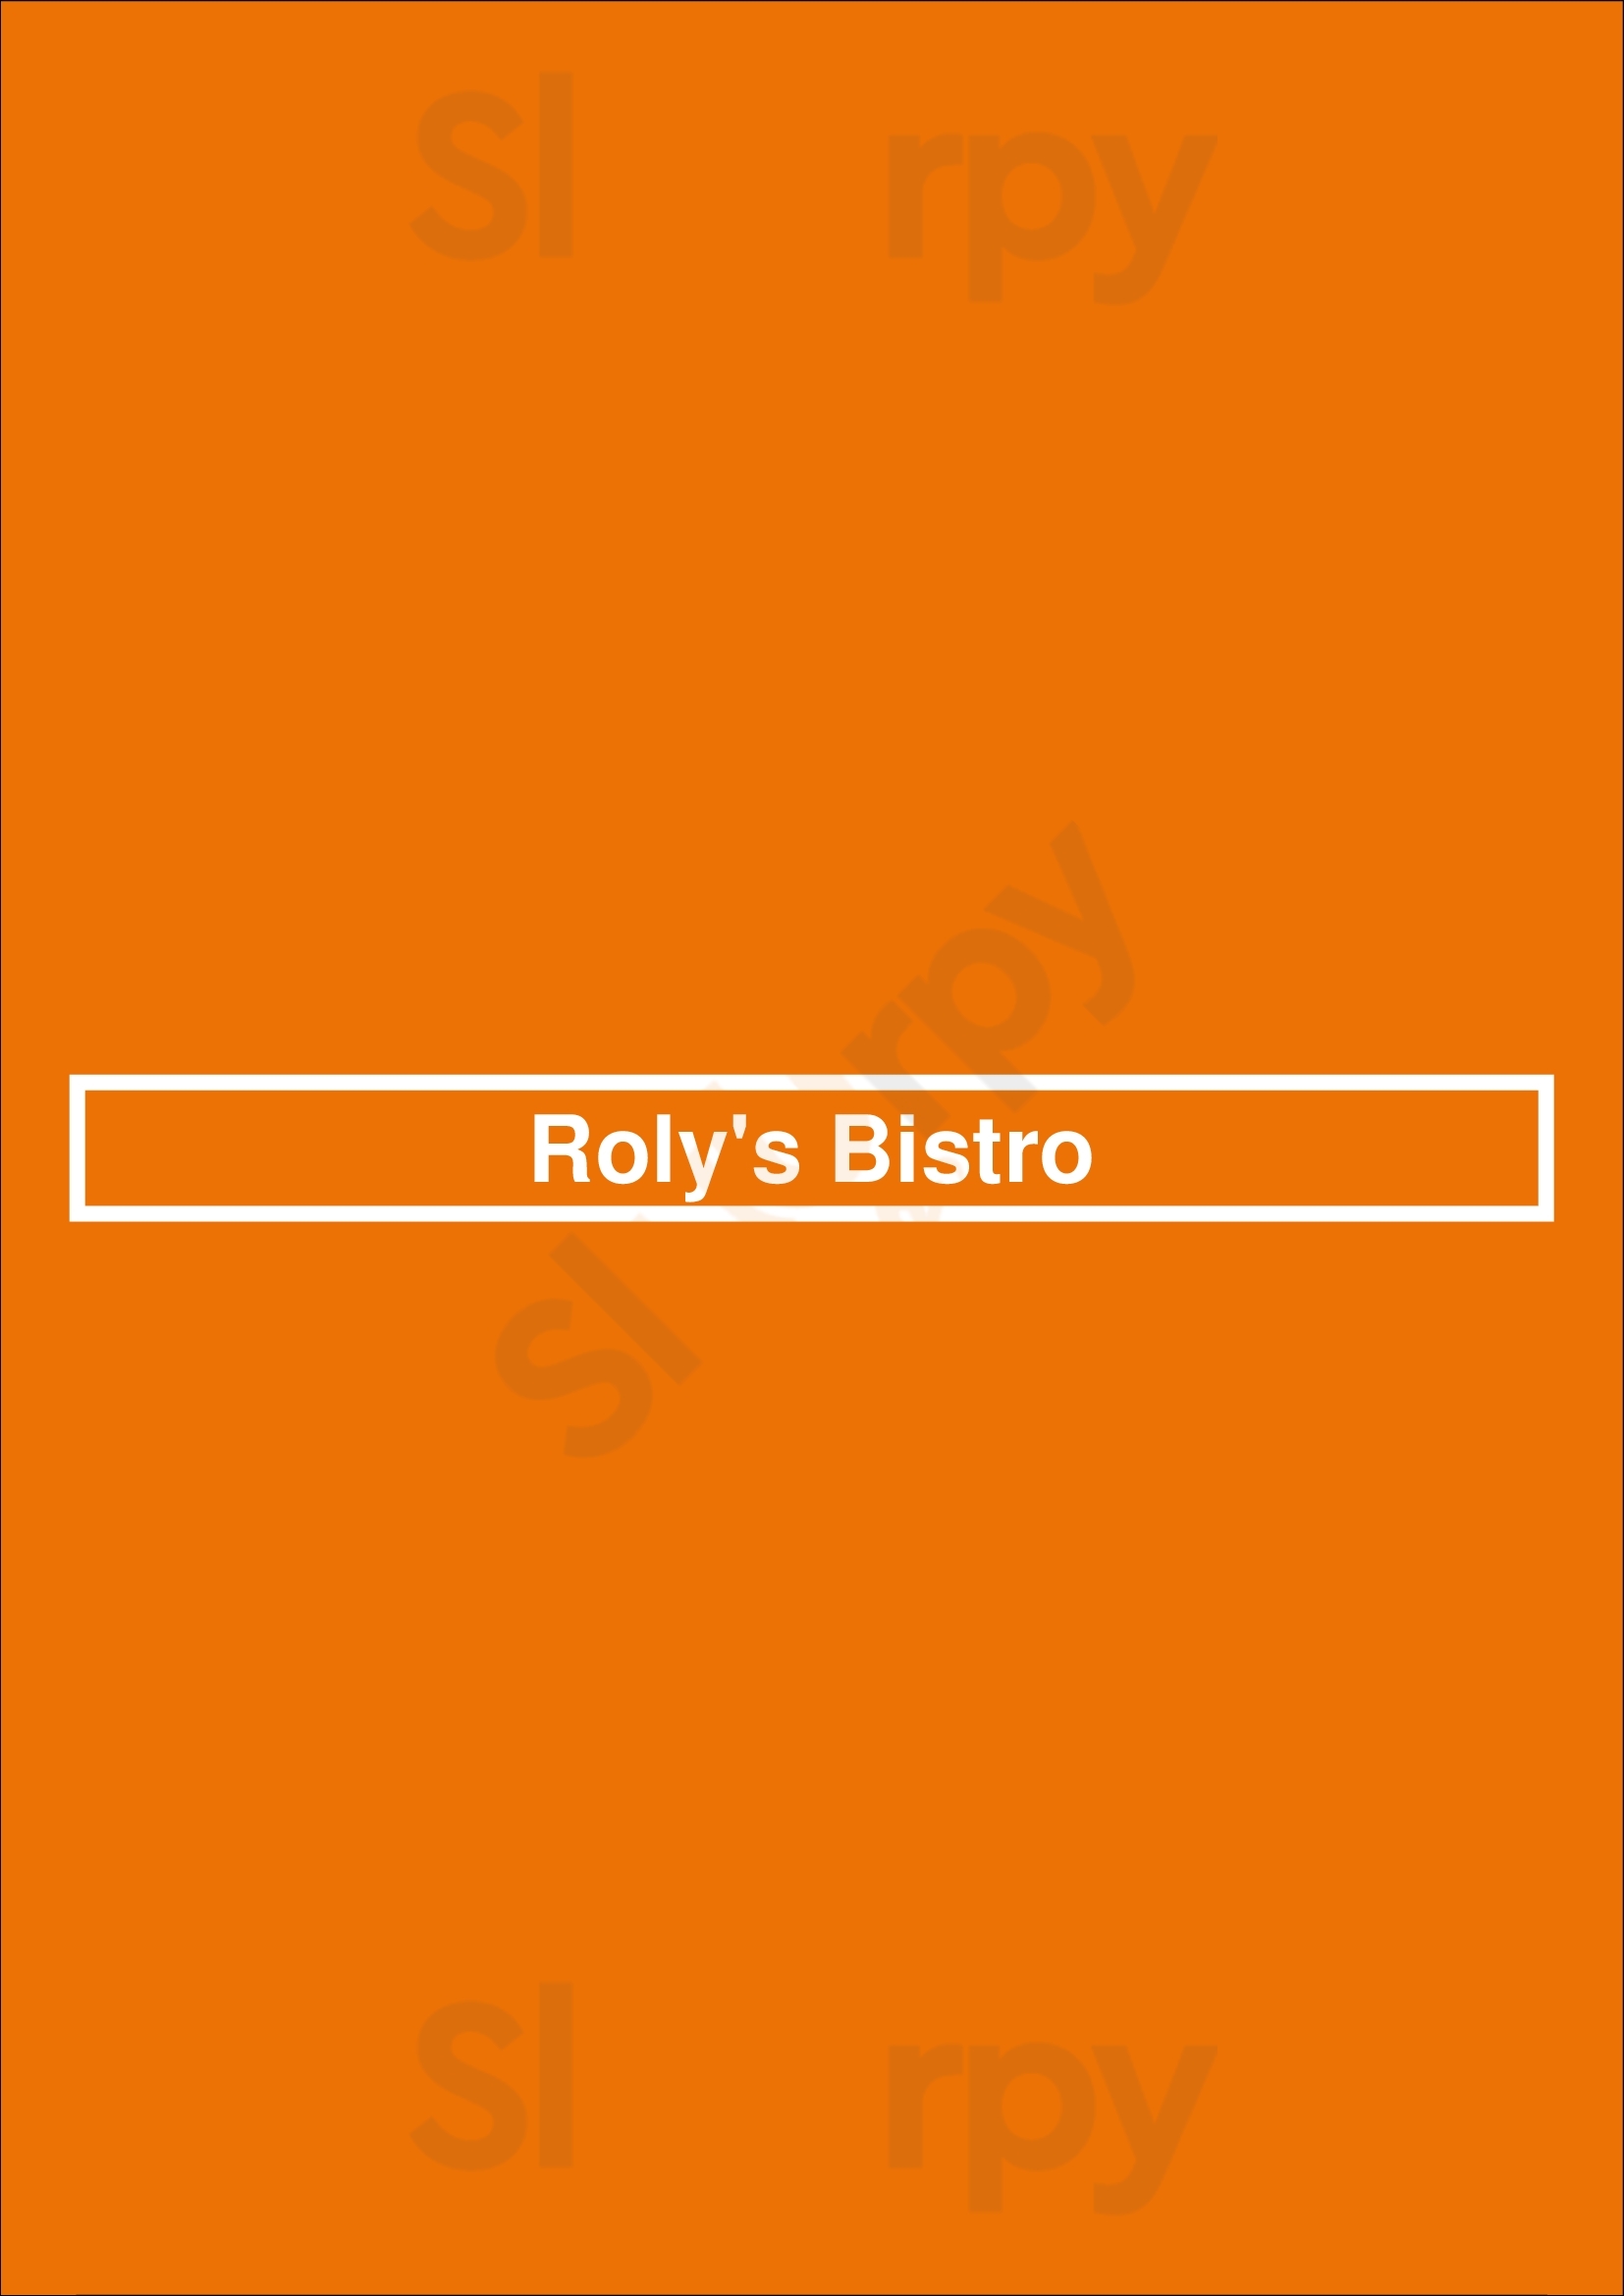 Roly's Bistro Dublin Menu - 1